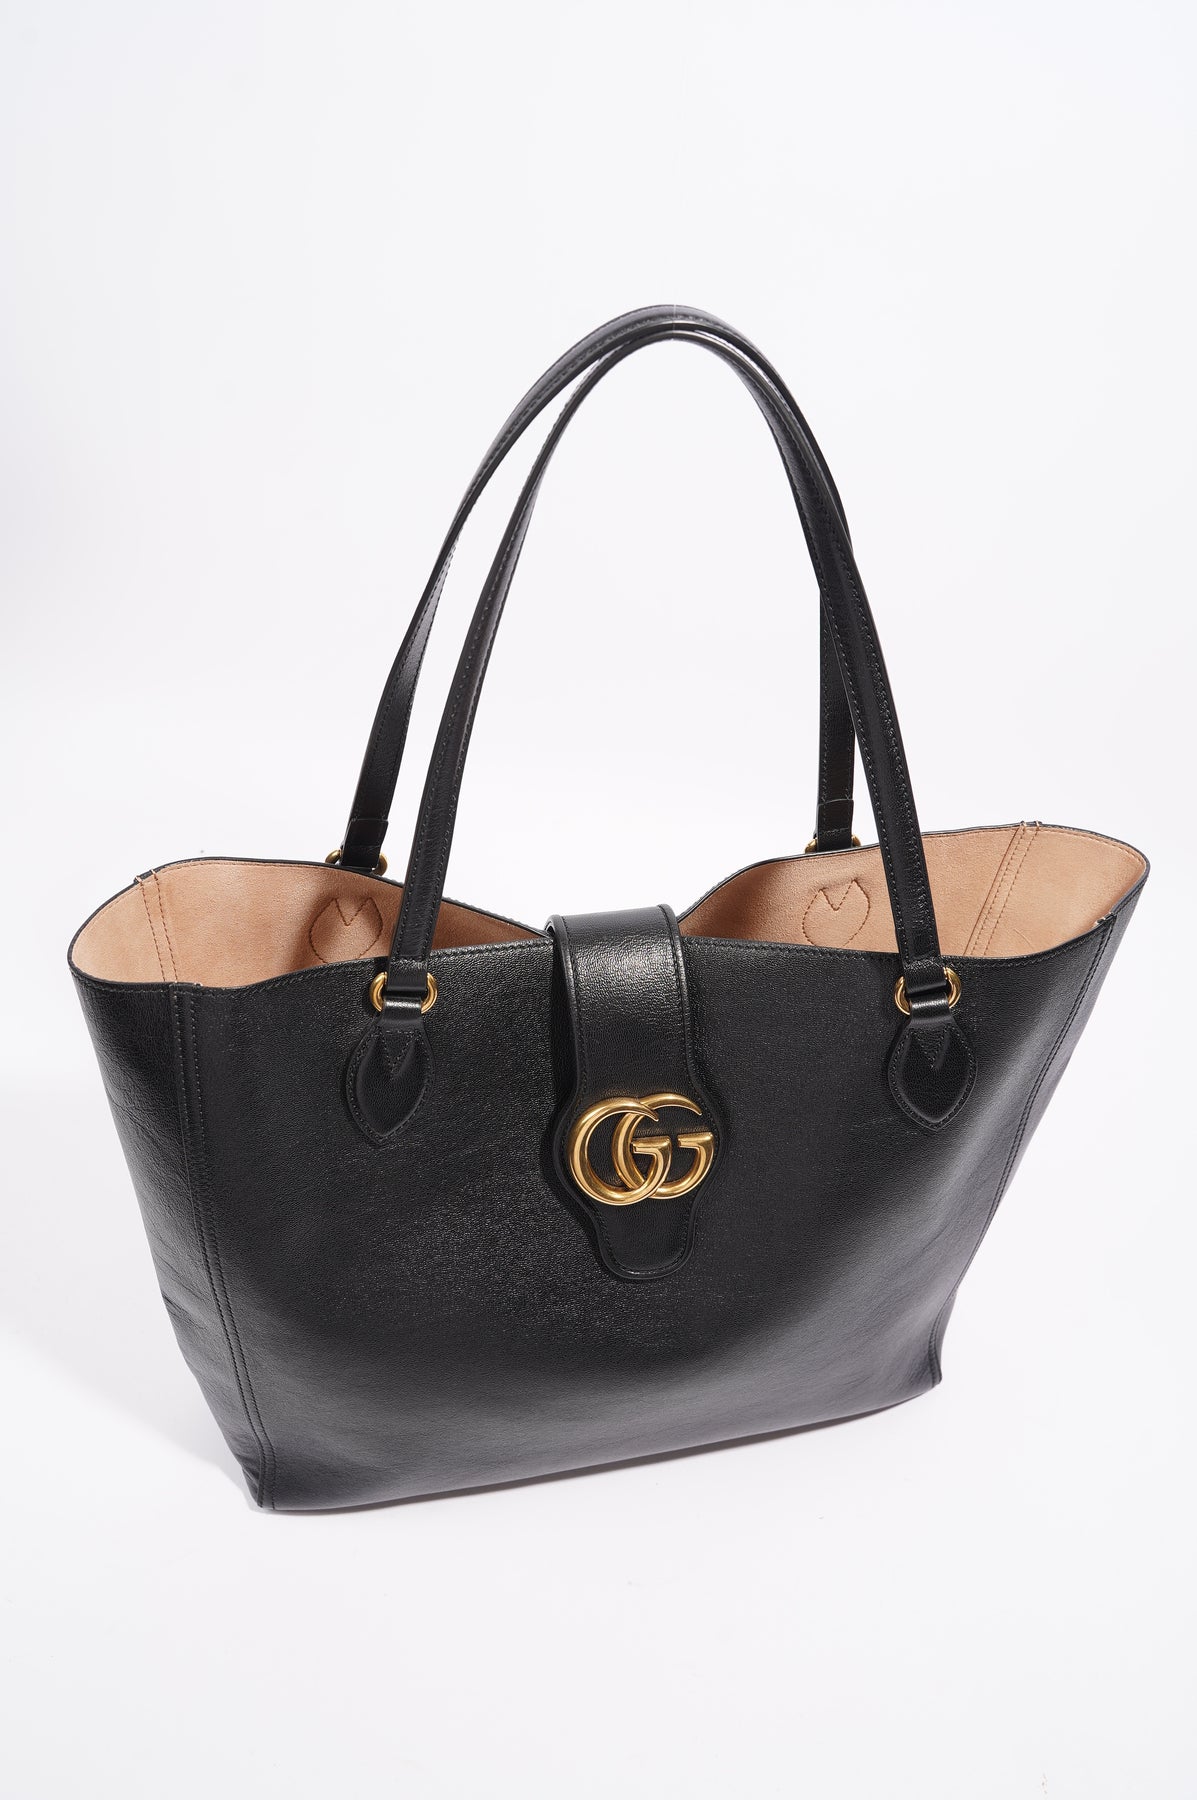 Gucci Leather Dahlia Tote Bag in Black